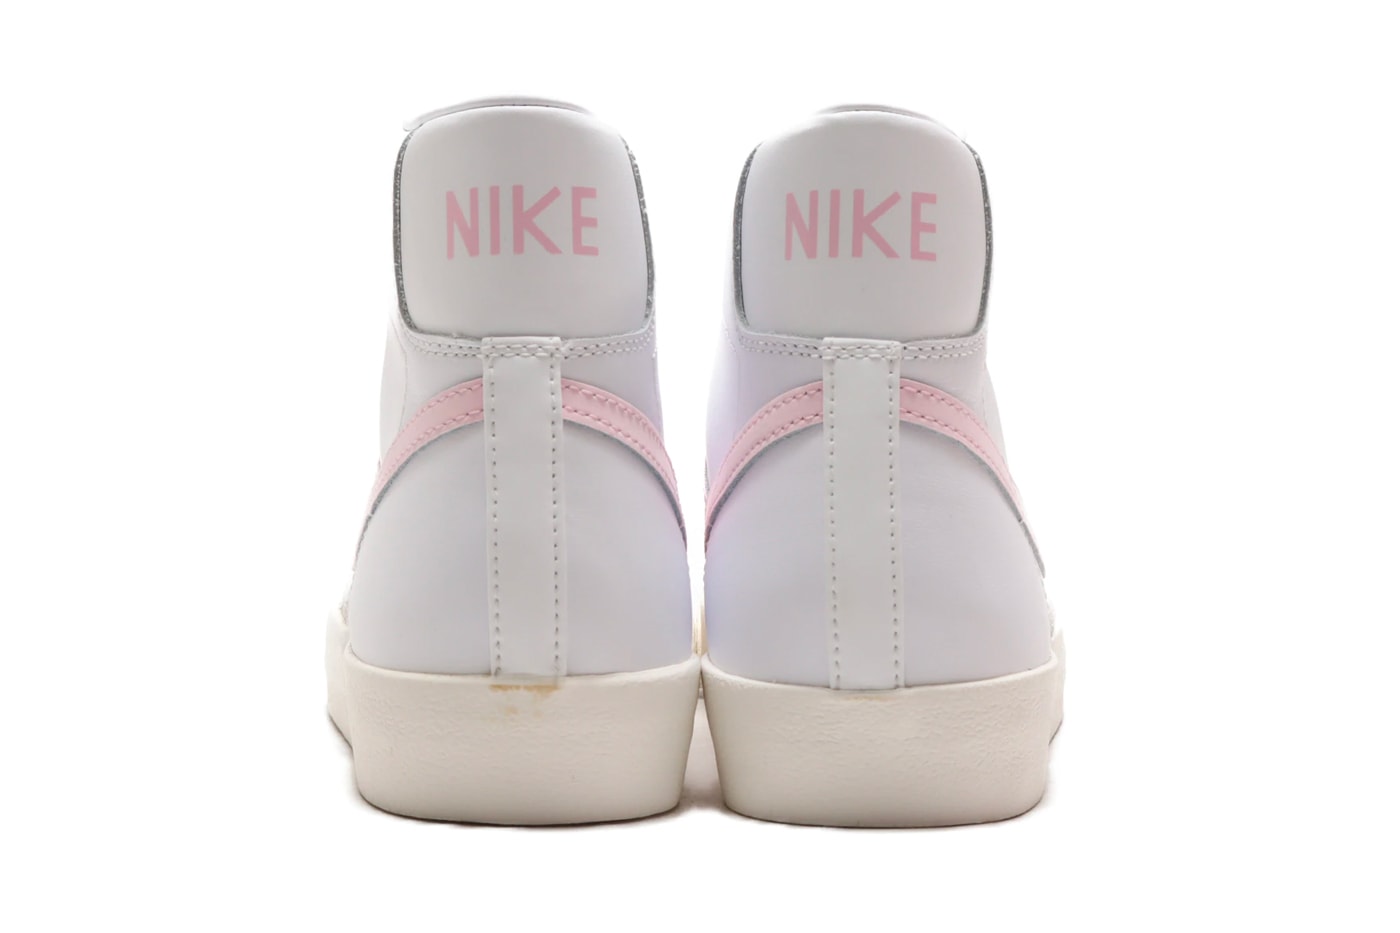 Nike Blazer 77 Mid Vintage White Pink Foam bq6806 108 Sneakers shoes footwear trainers runners kicks spring summer 2020 collection menswear streetwear